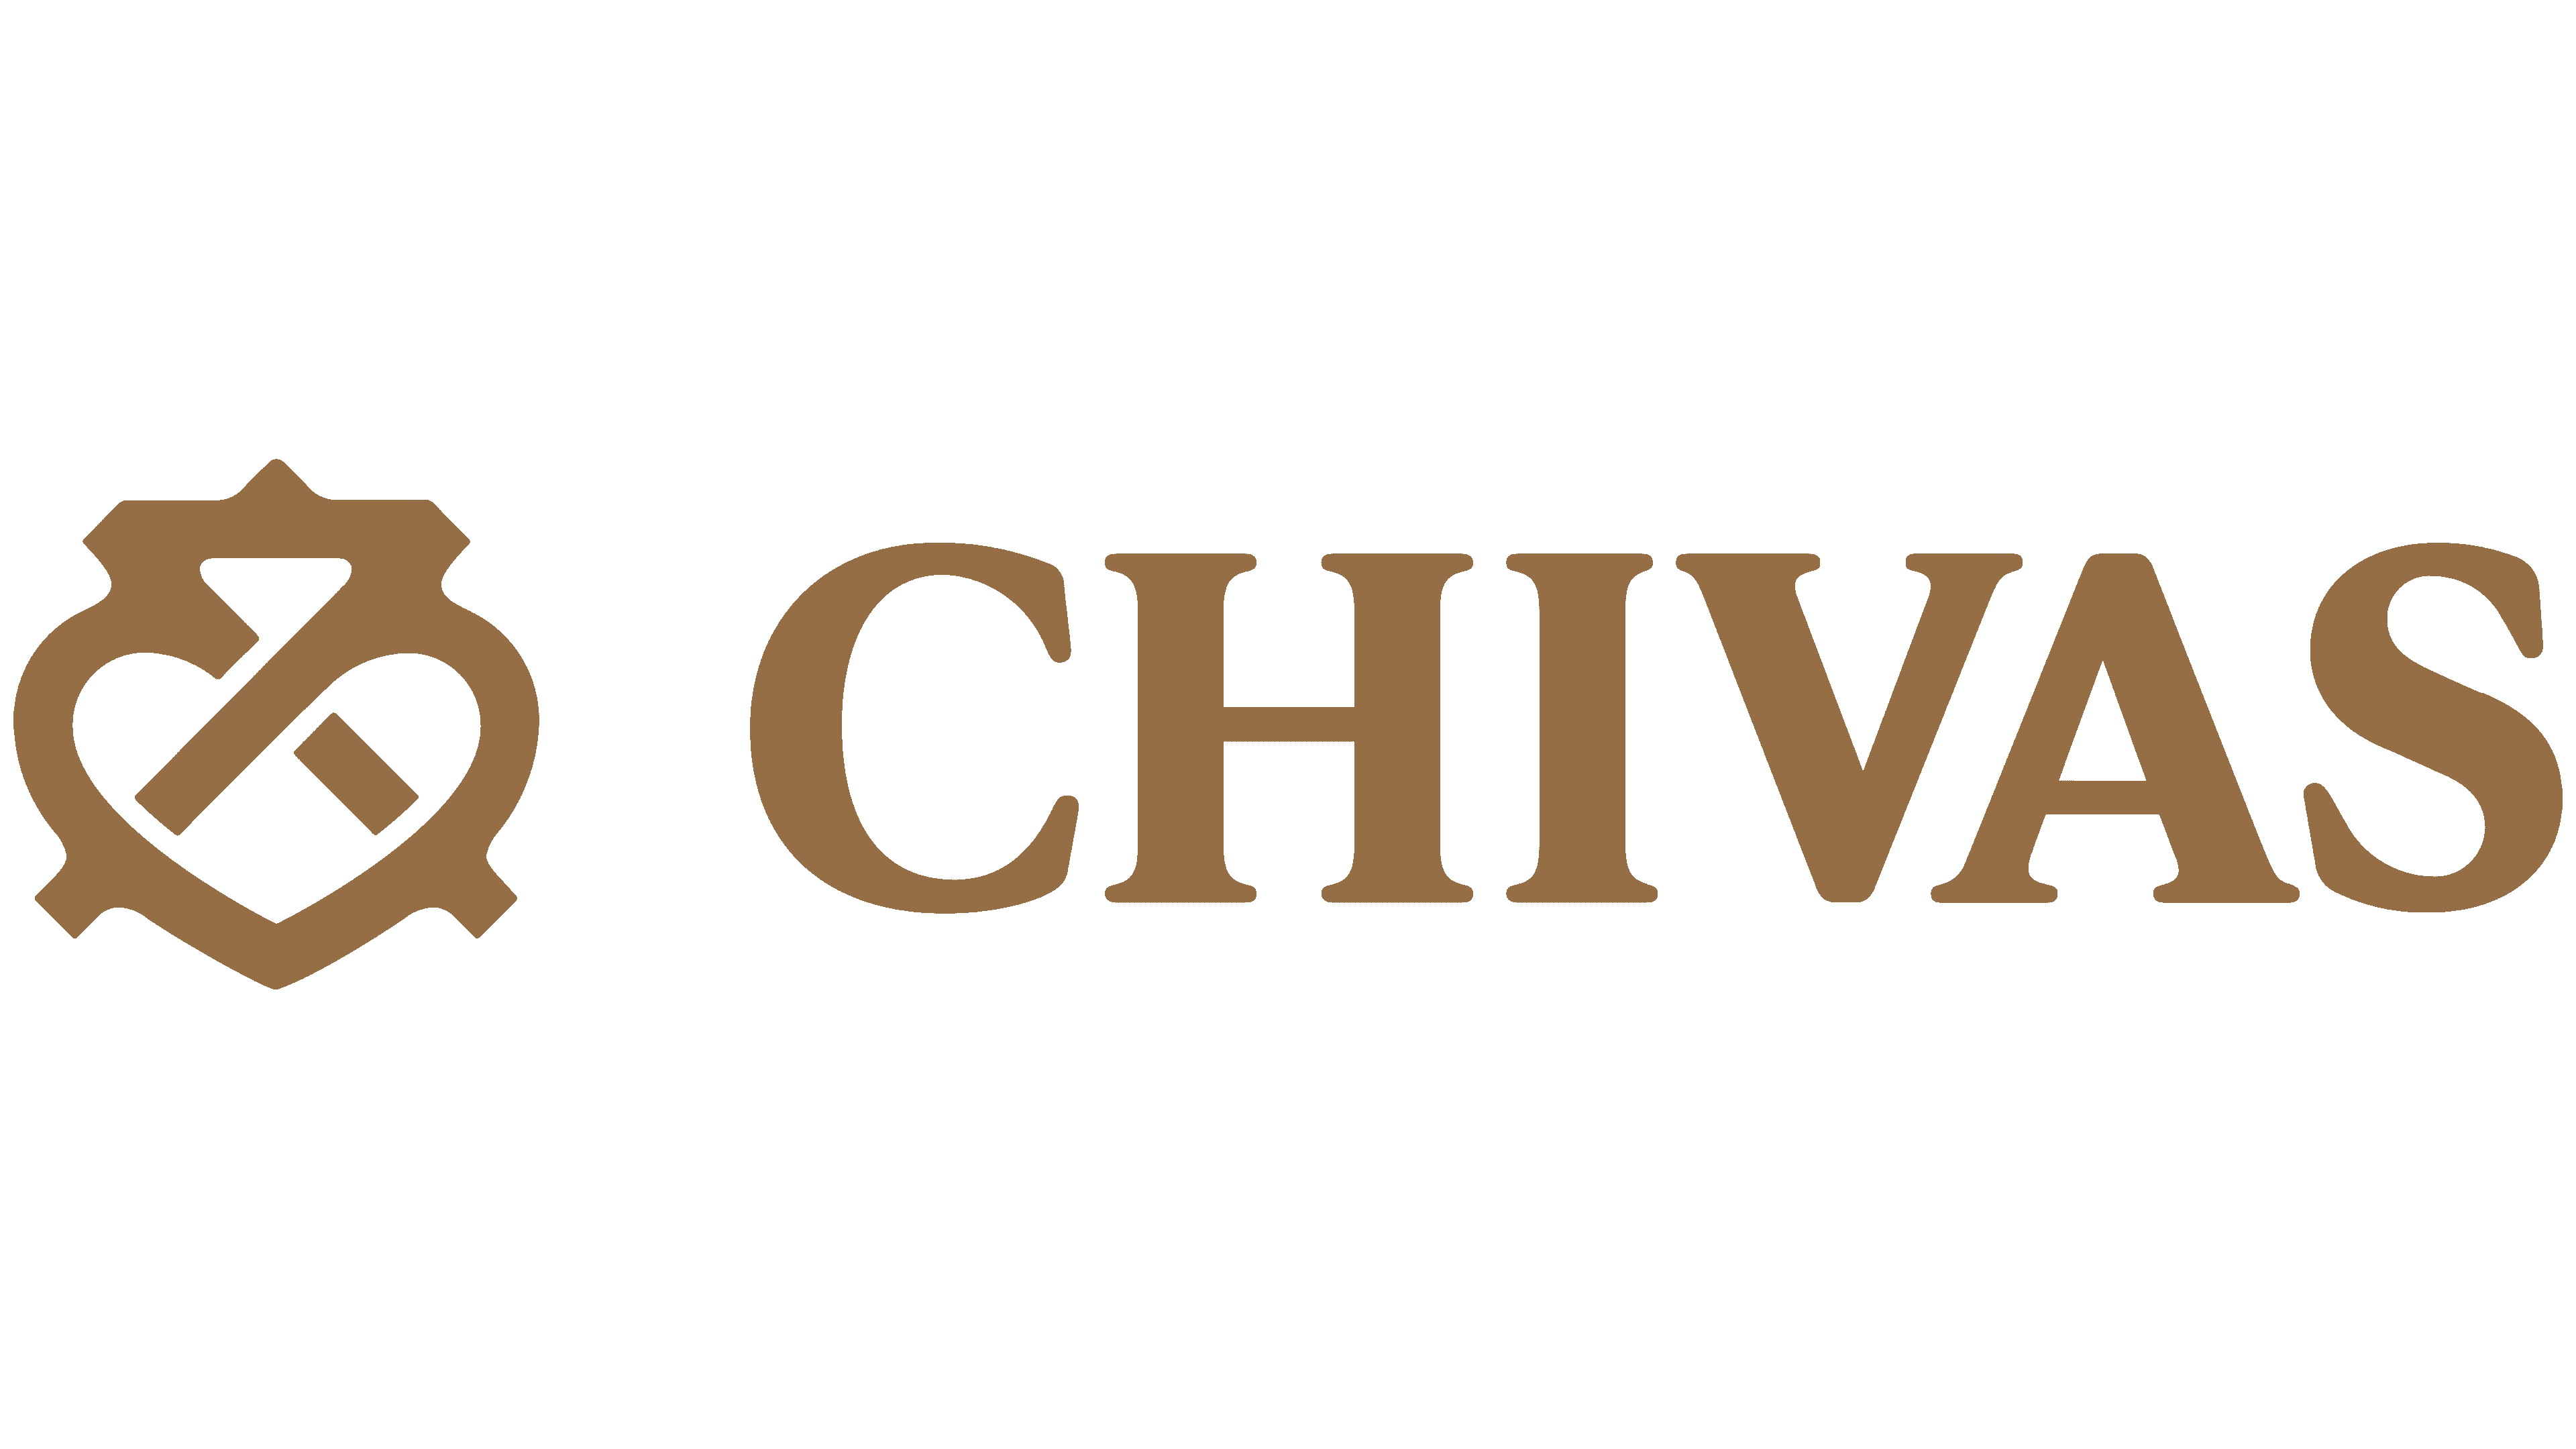 Chivas-Logo